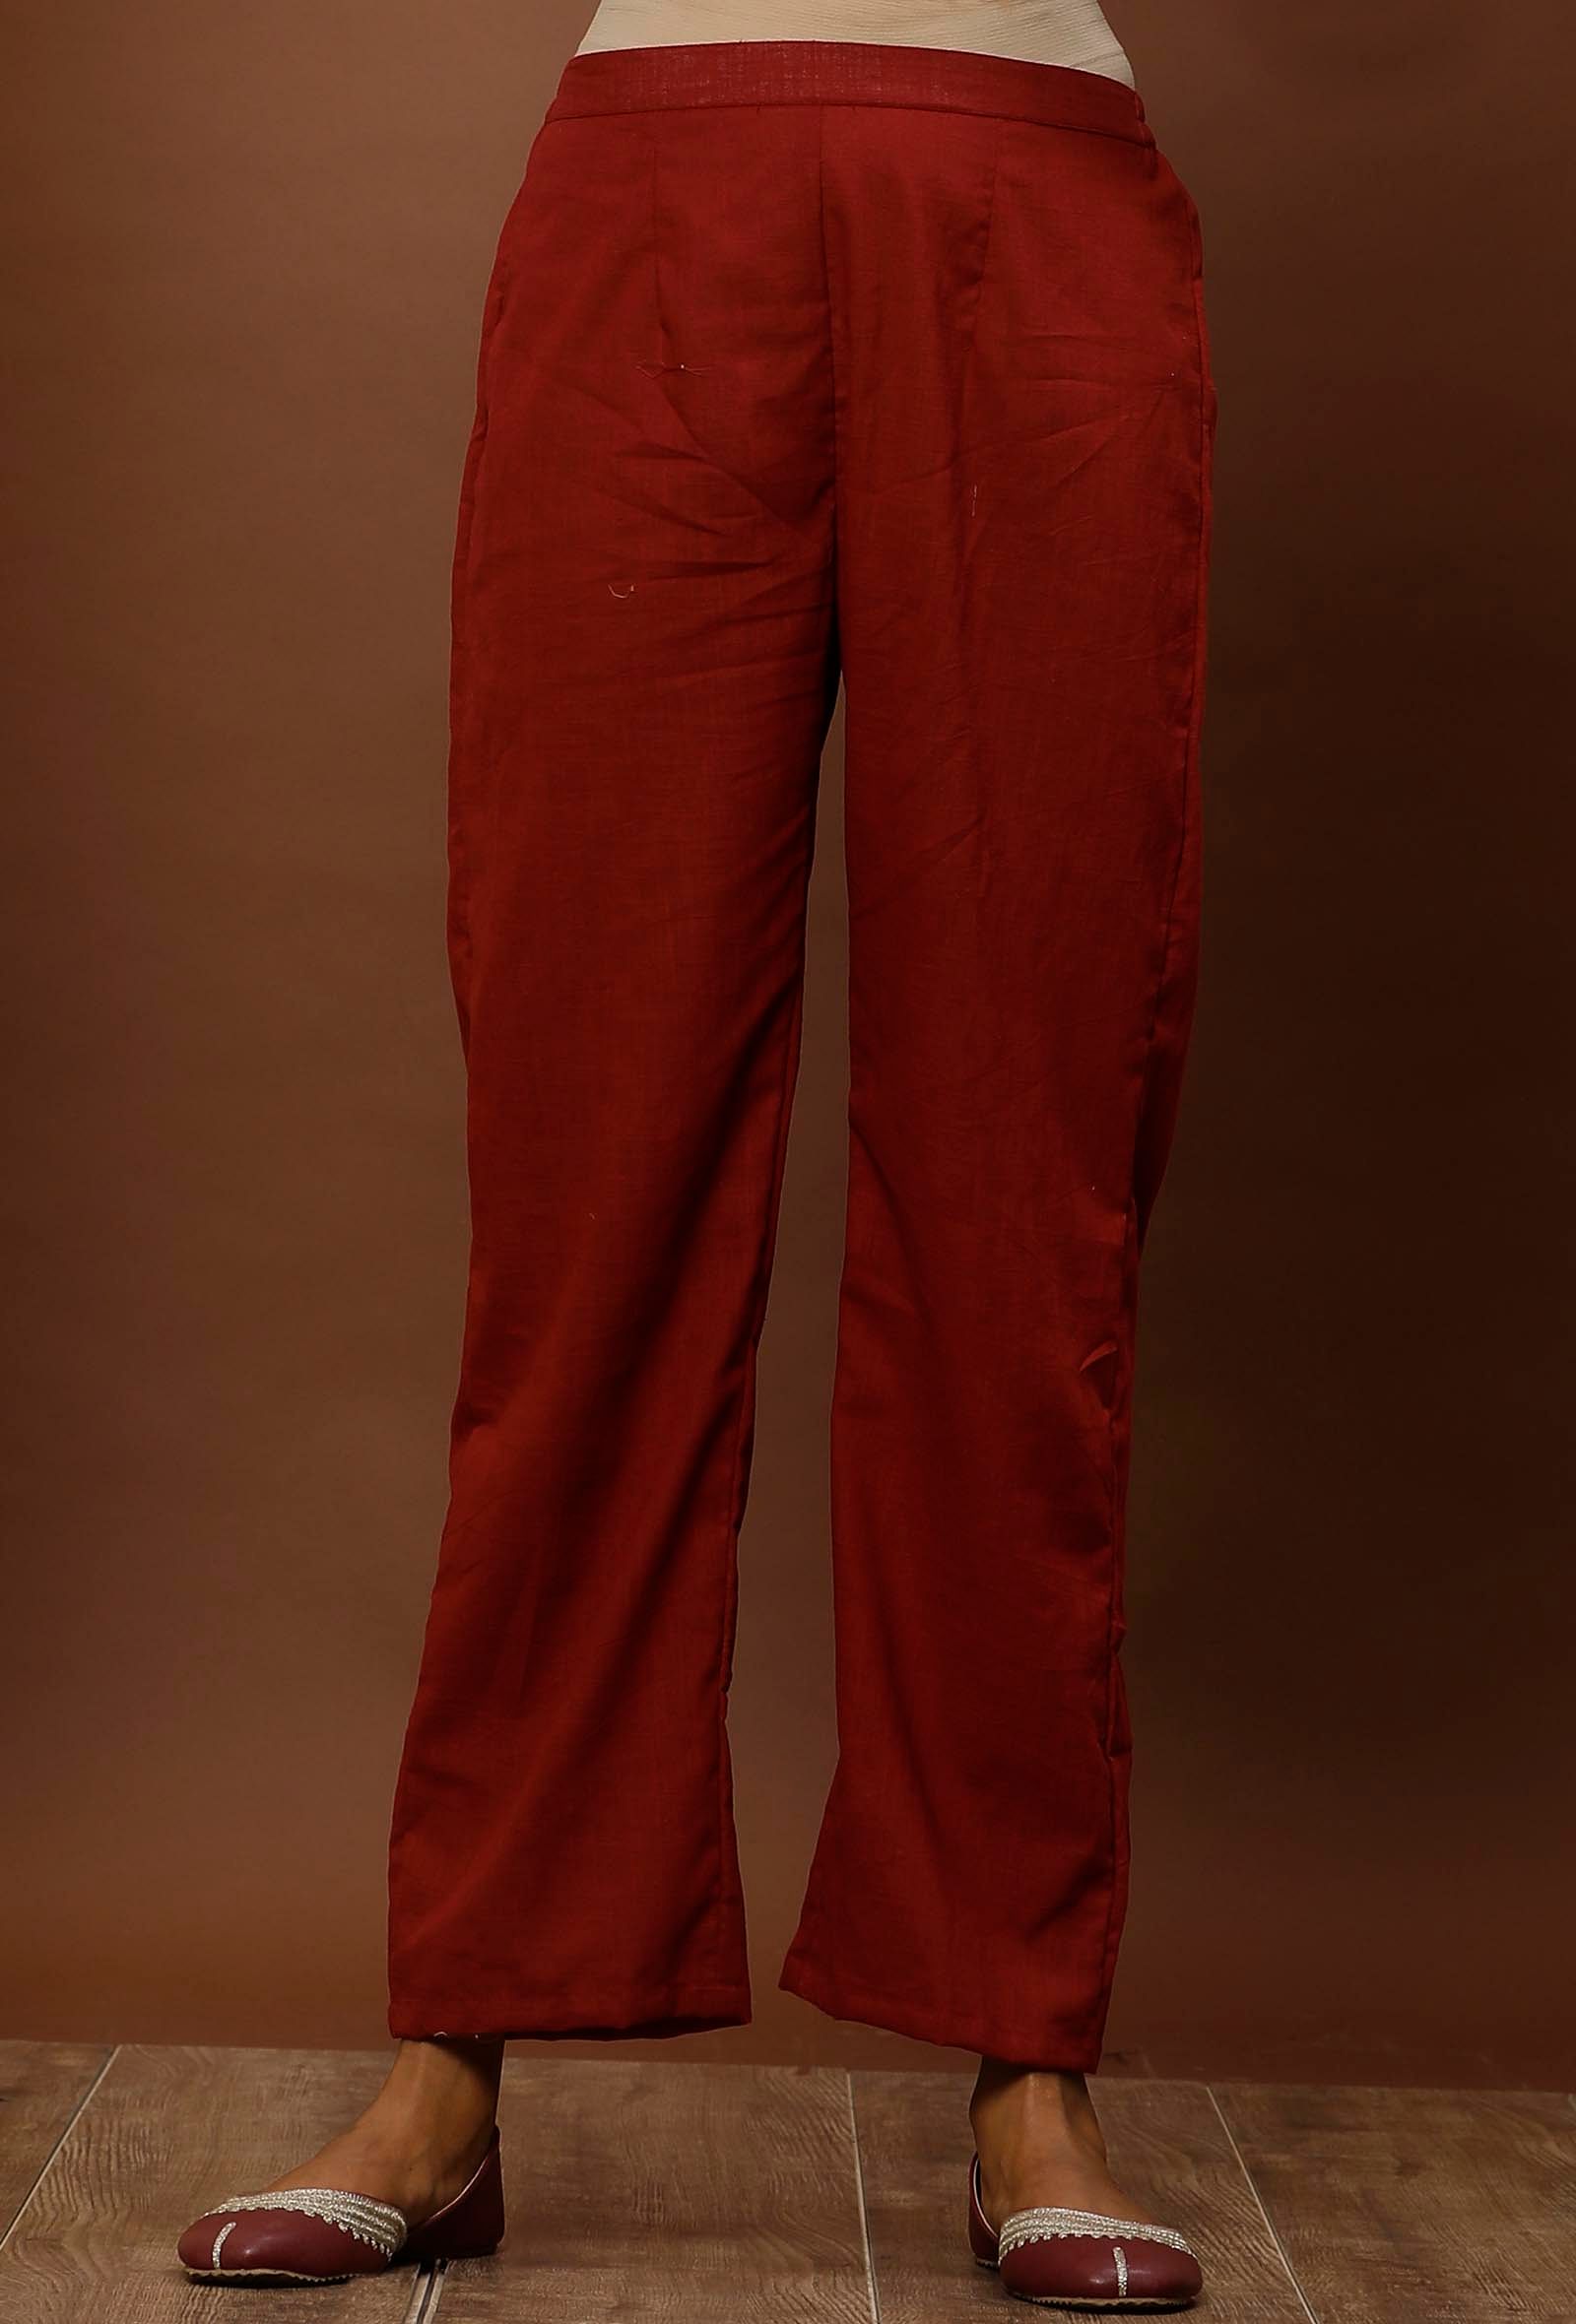 Set of 3: White & Rust Red Kalamkari Cotton Kurta with Red Cotton Straight Pants & Dupatta